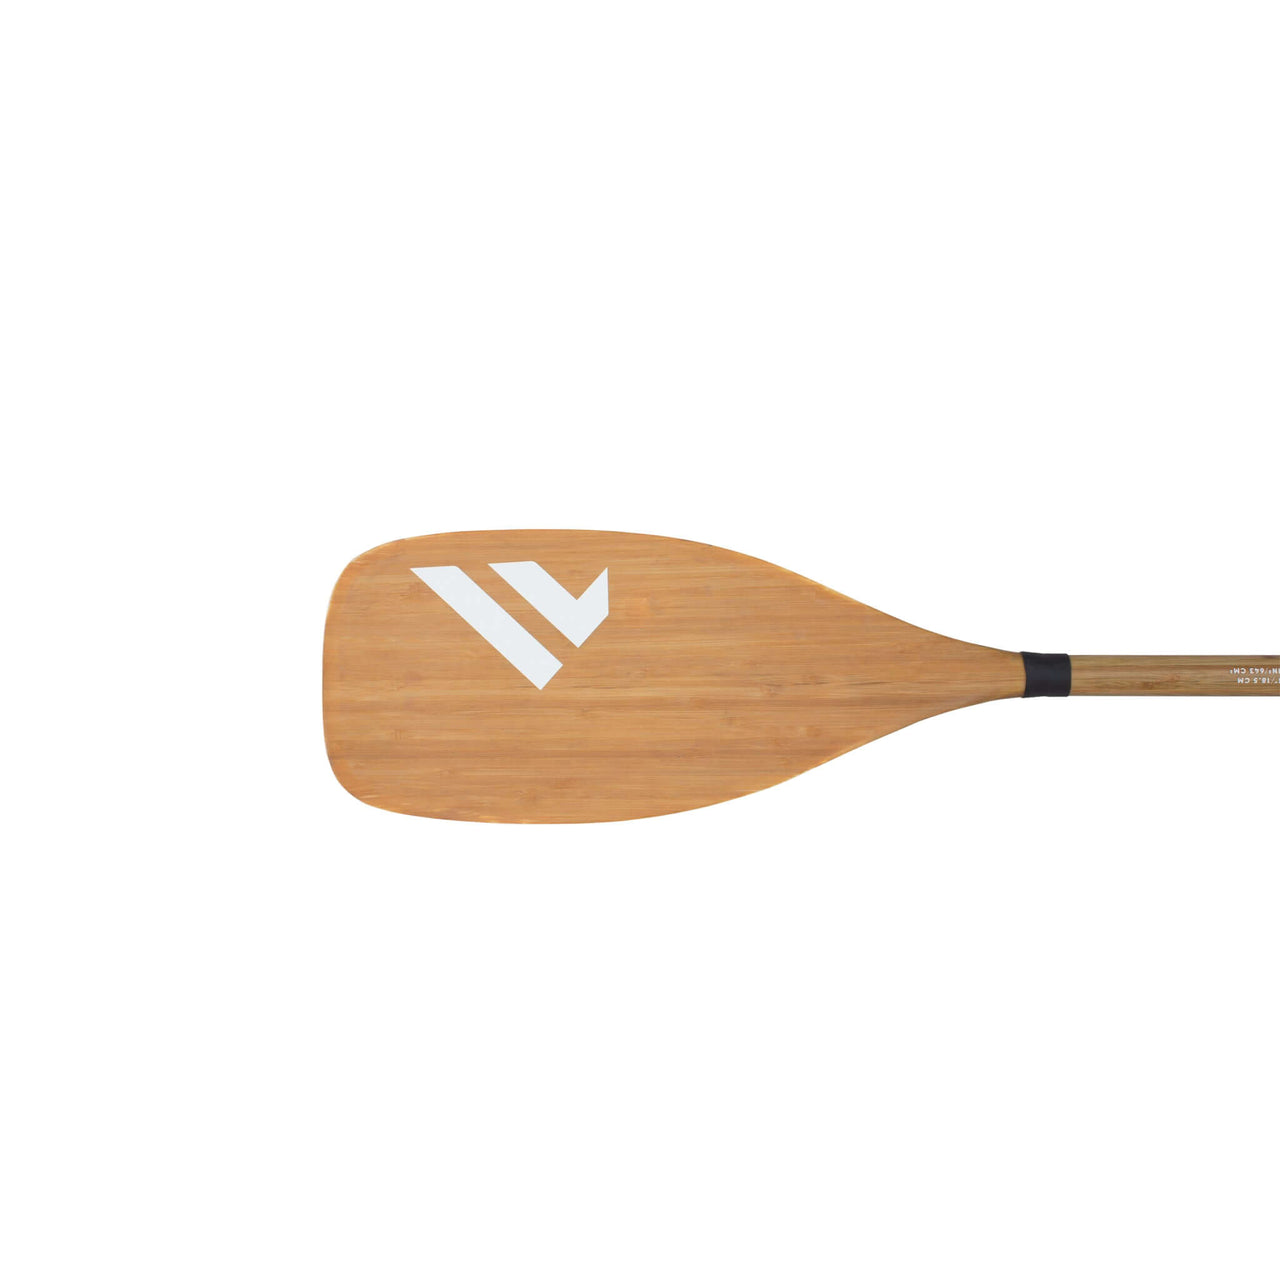 Fanatic Paddle Bamboo Carbon 50 Slim – SUP Paddel